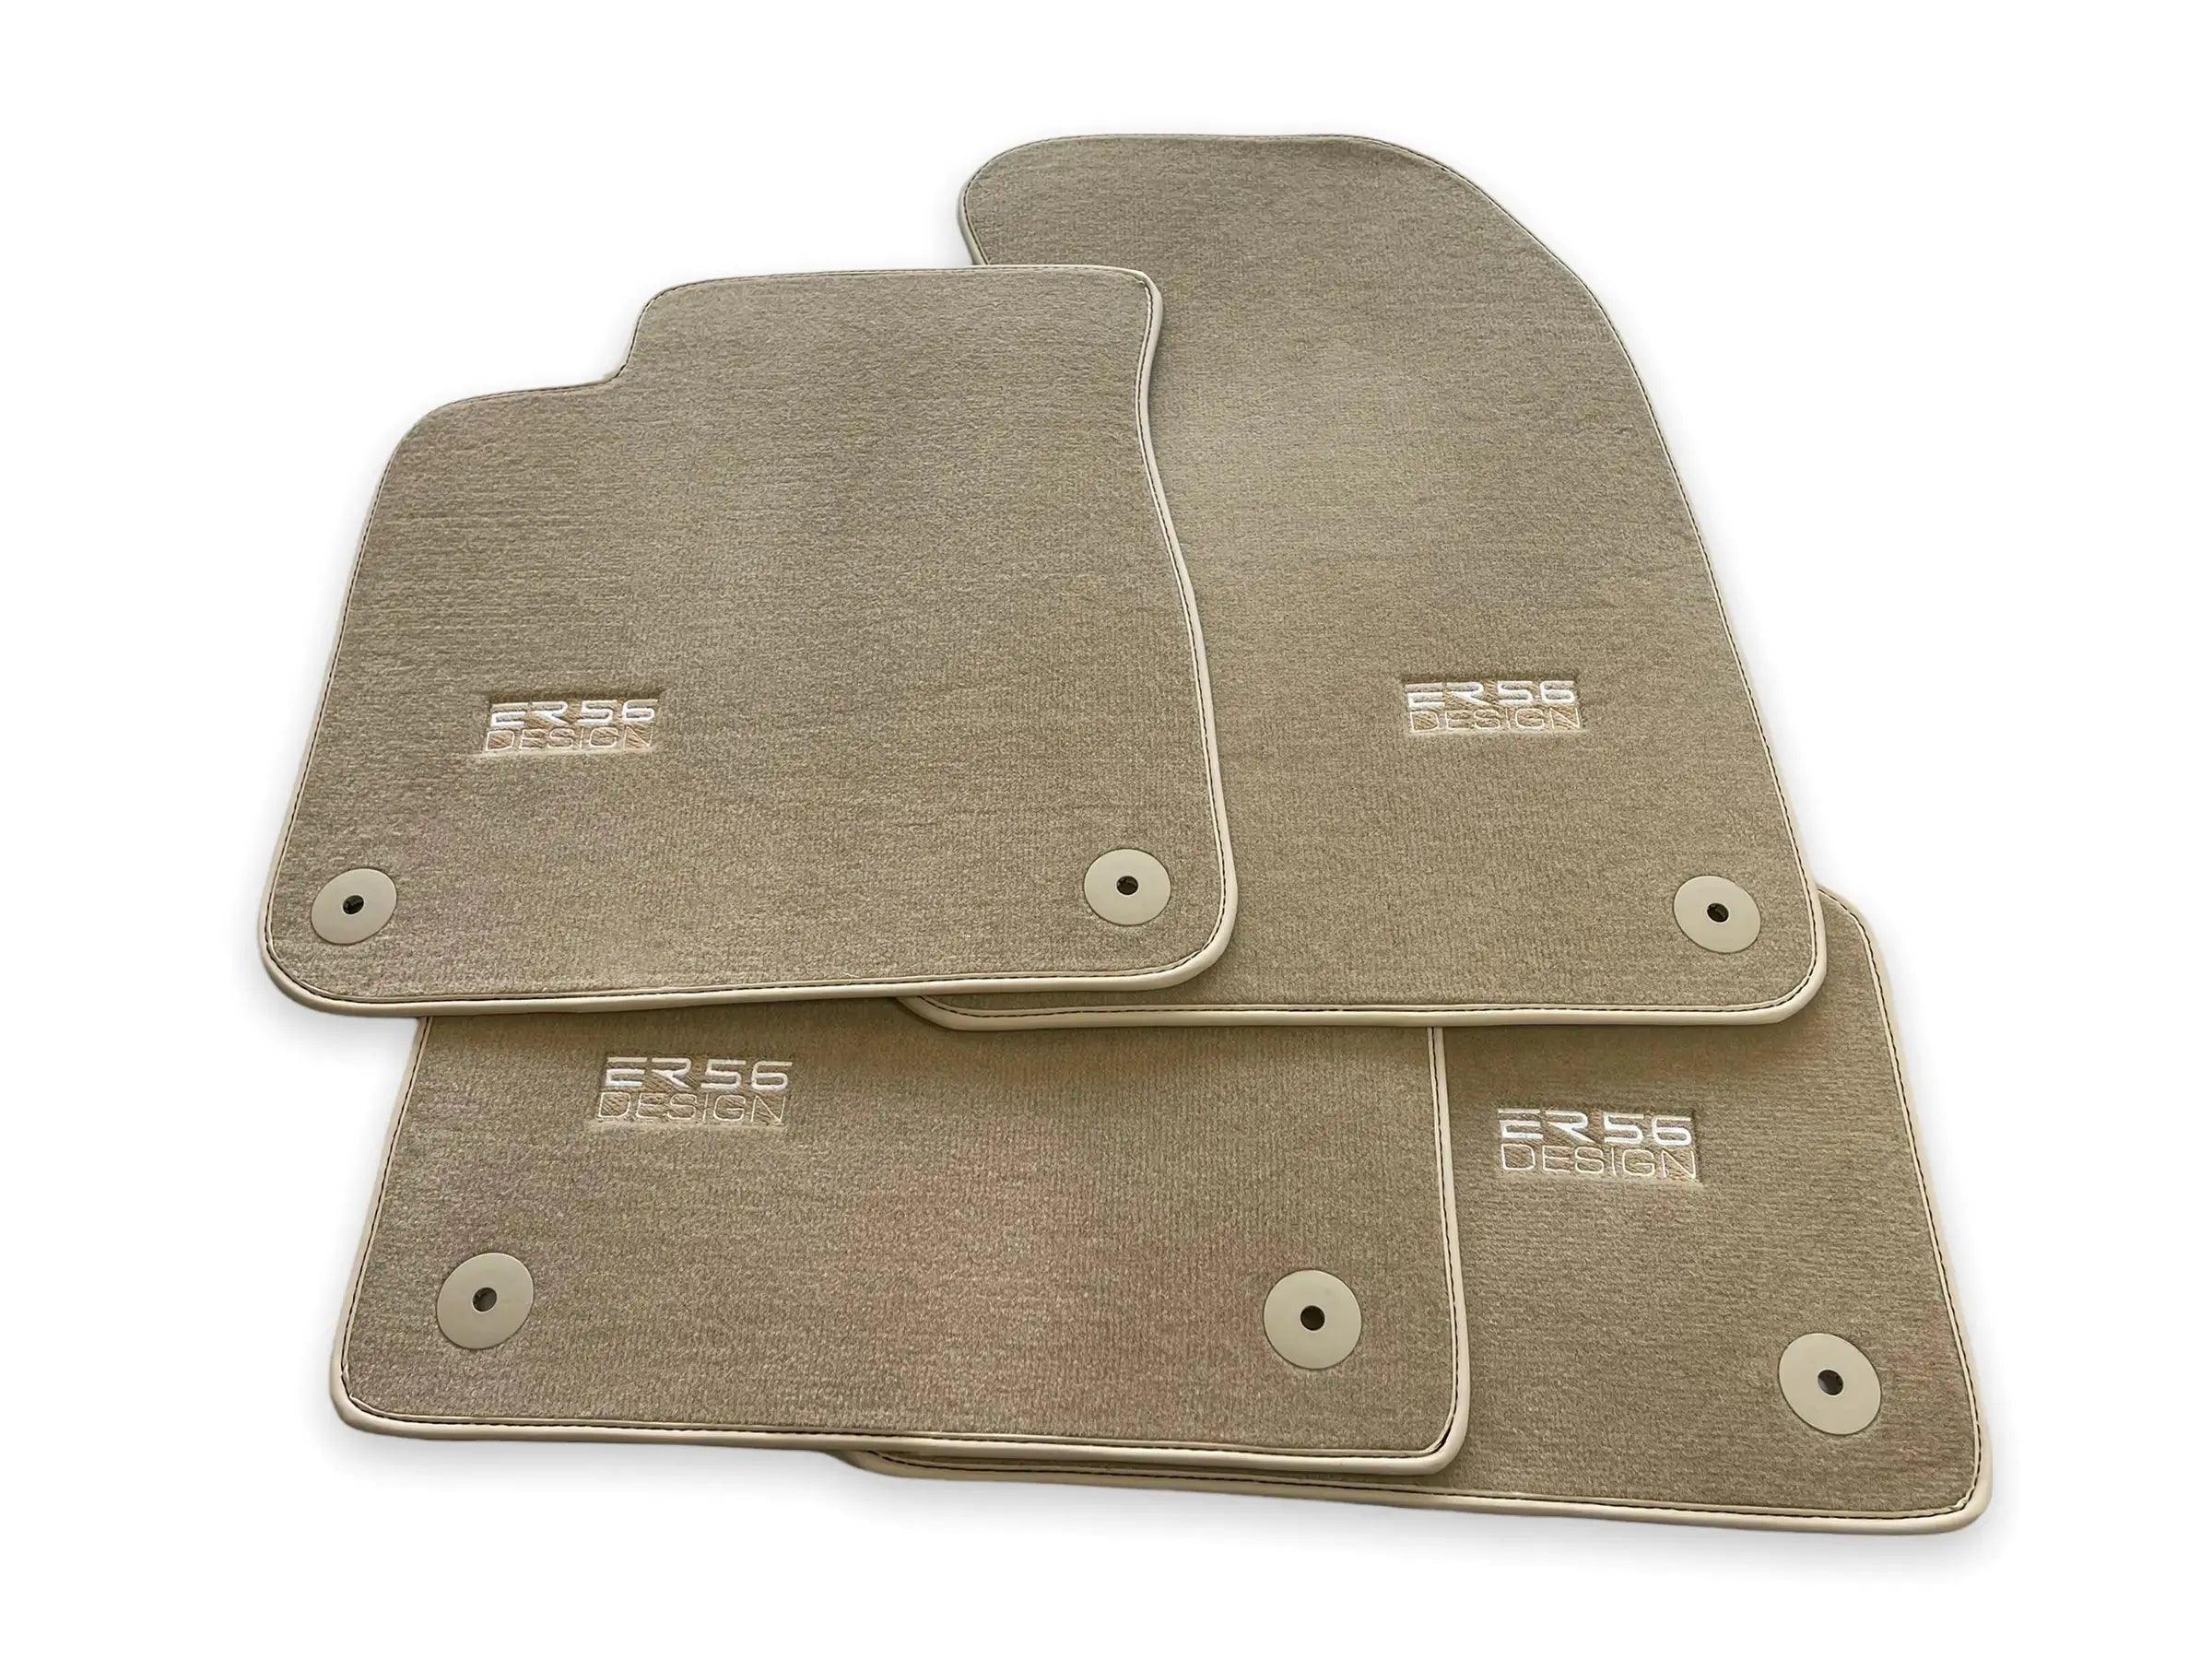 Beige Floor Mats for Audi A4 - B8 Sedan (2008-2015) | ER56 Design - AutoWin